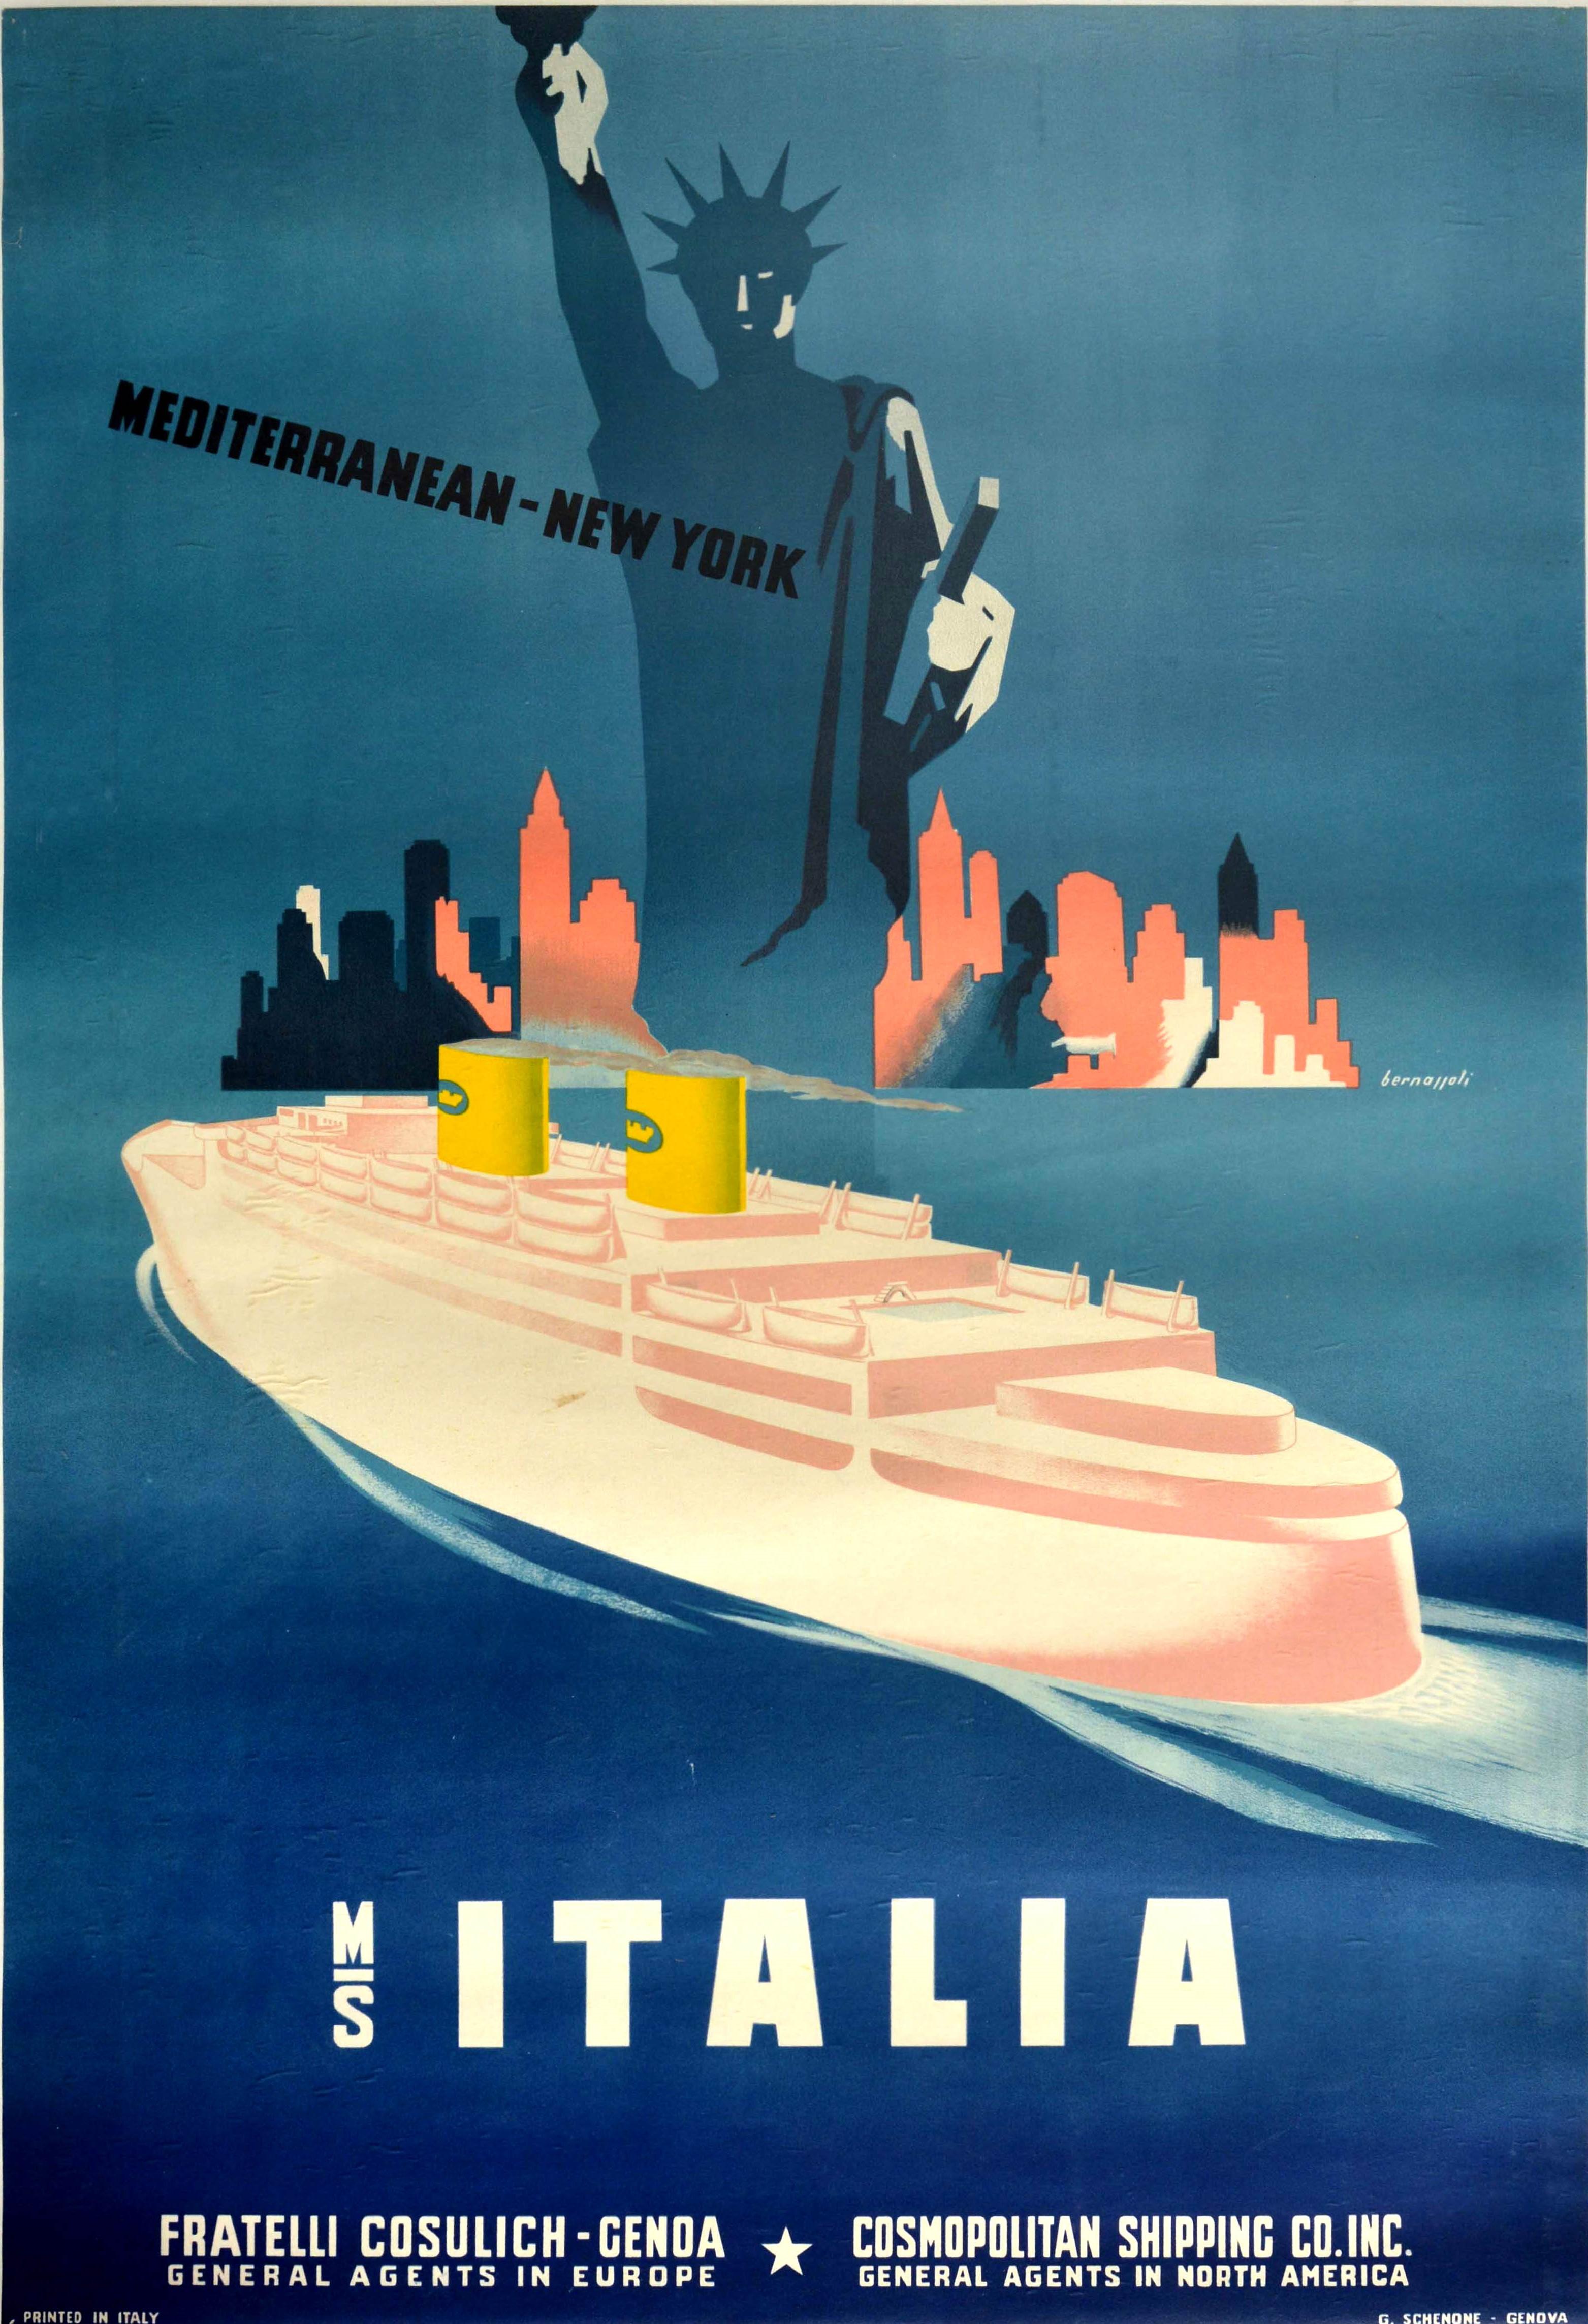 Dario Bernazzoli Print - Original Vintage Travel Poster Mediterranean New York City MS Italia Cruise Ship